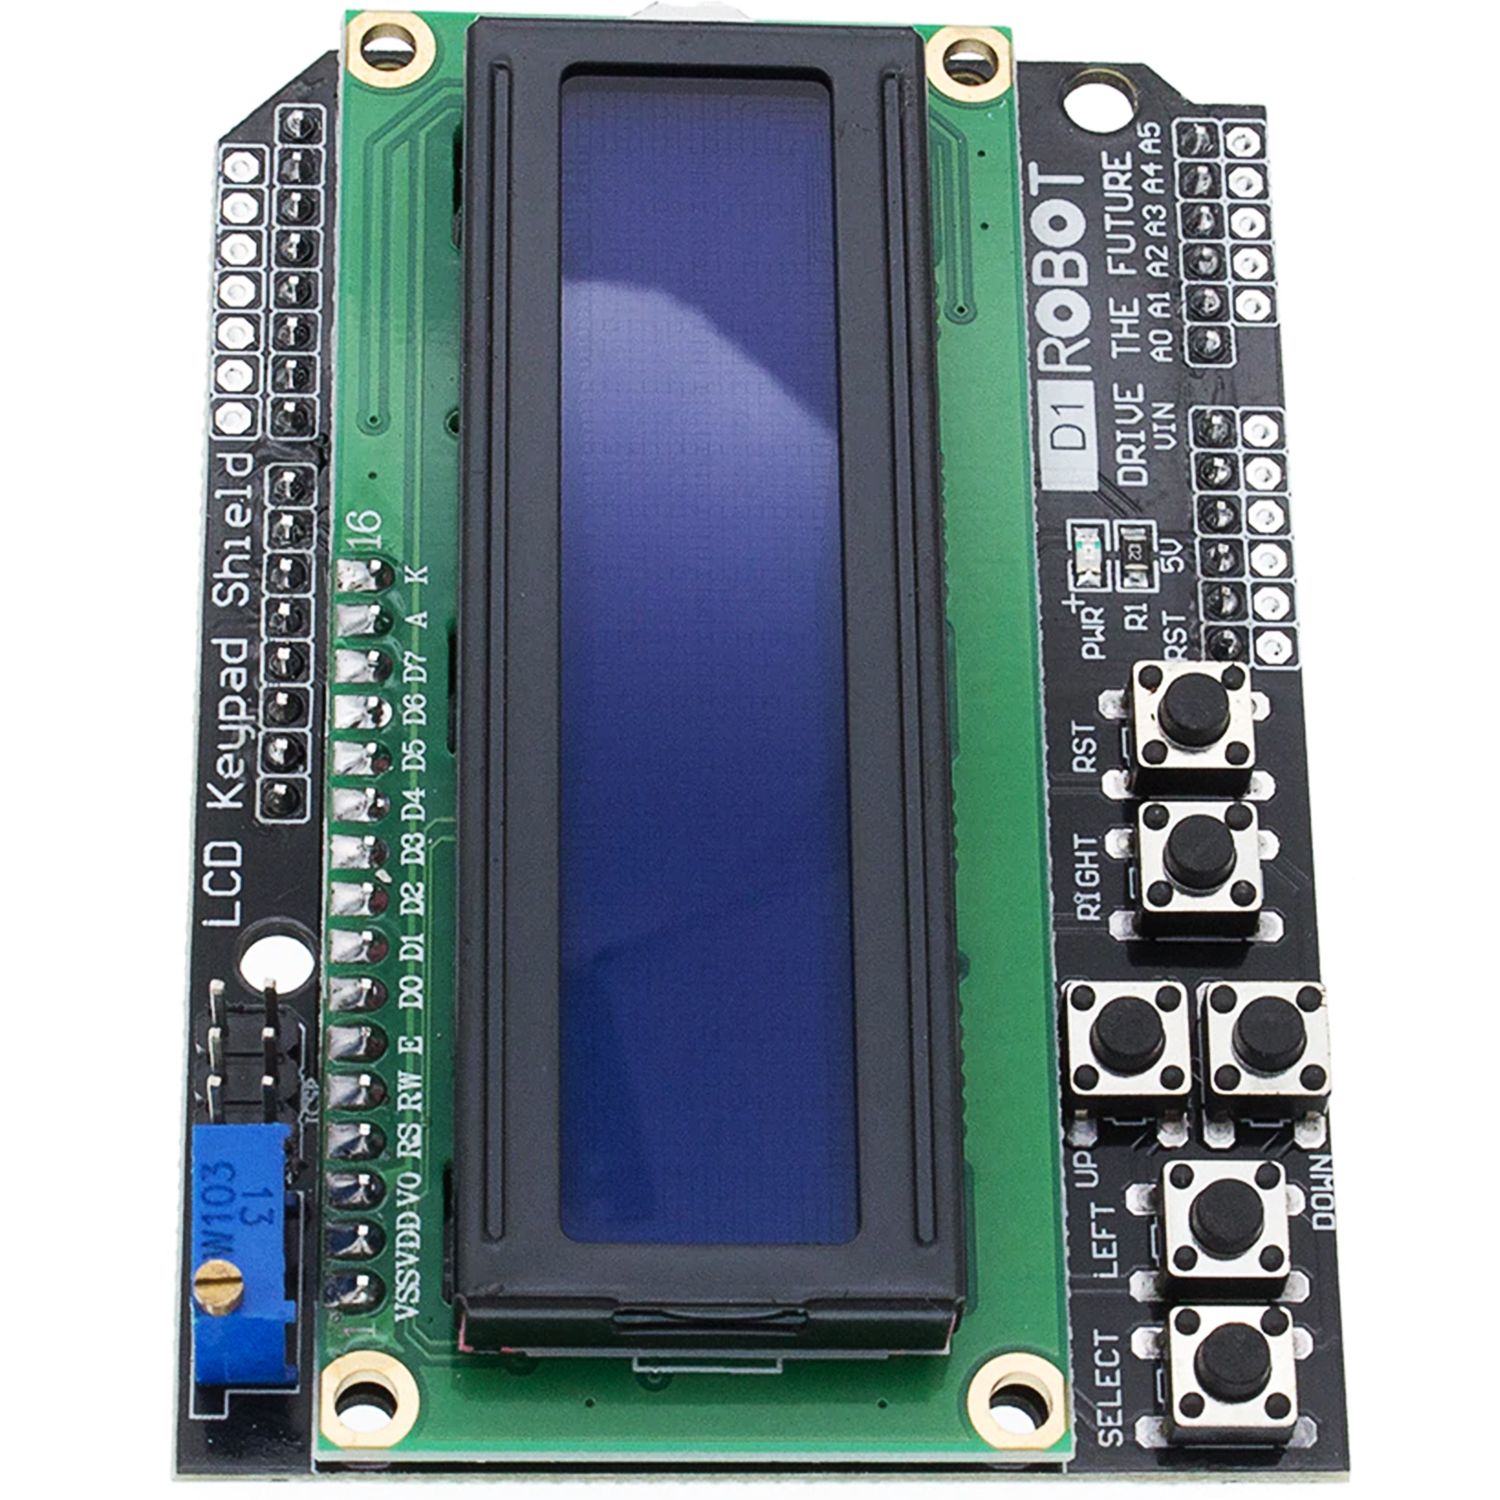 Модуль Keypad Shield с LCD дисплеем 1602 I2C